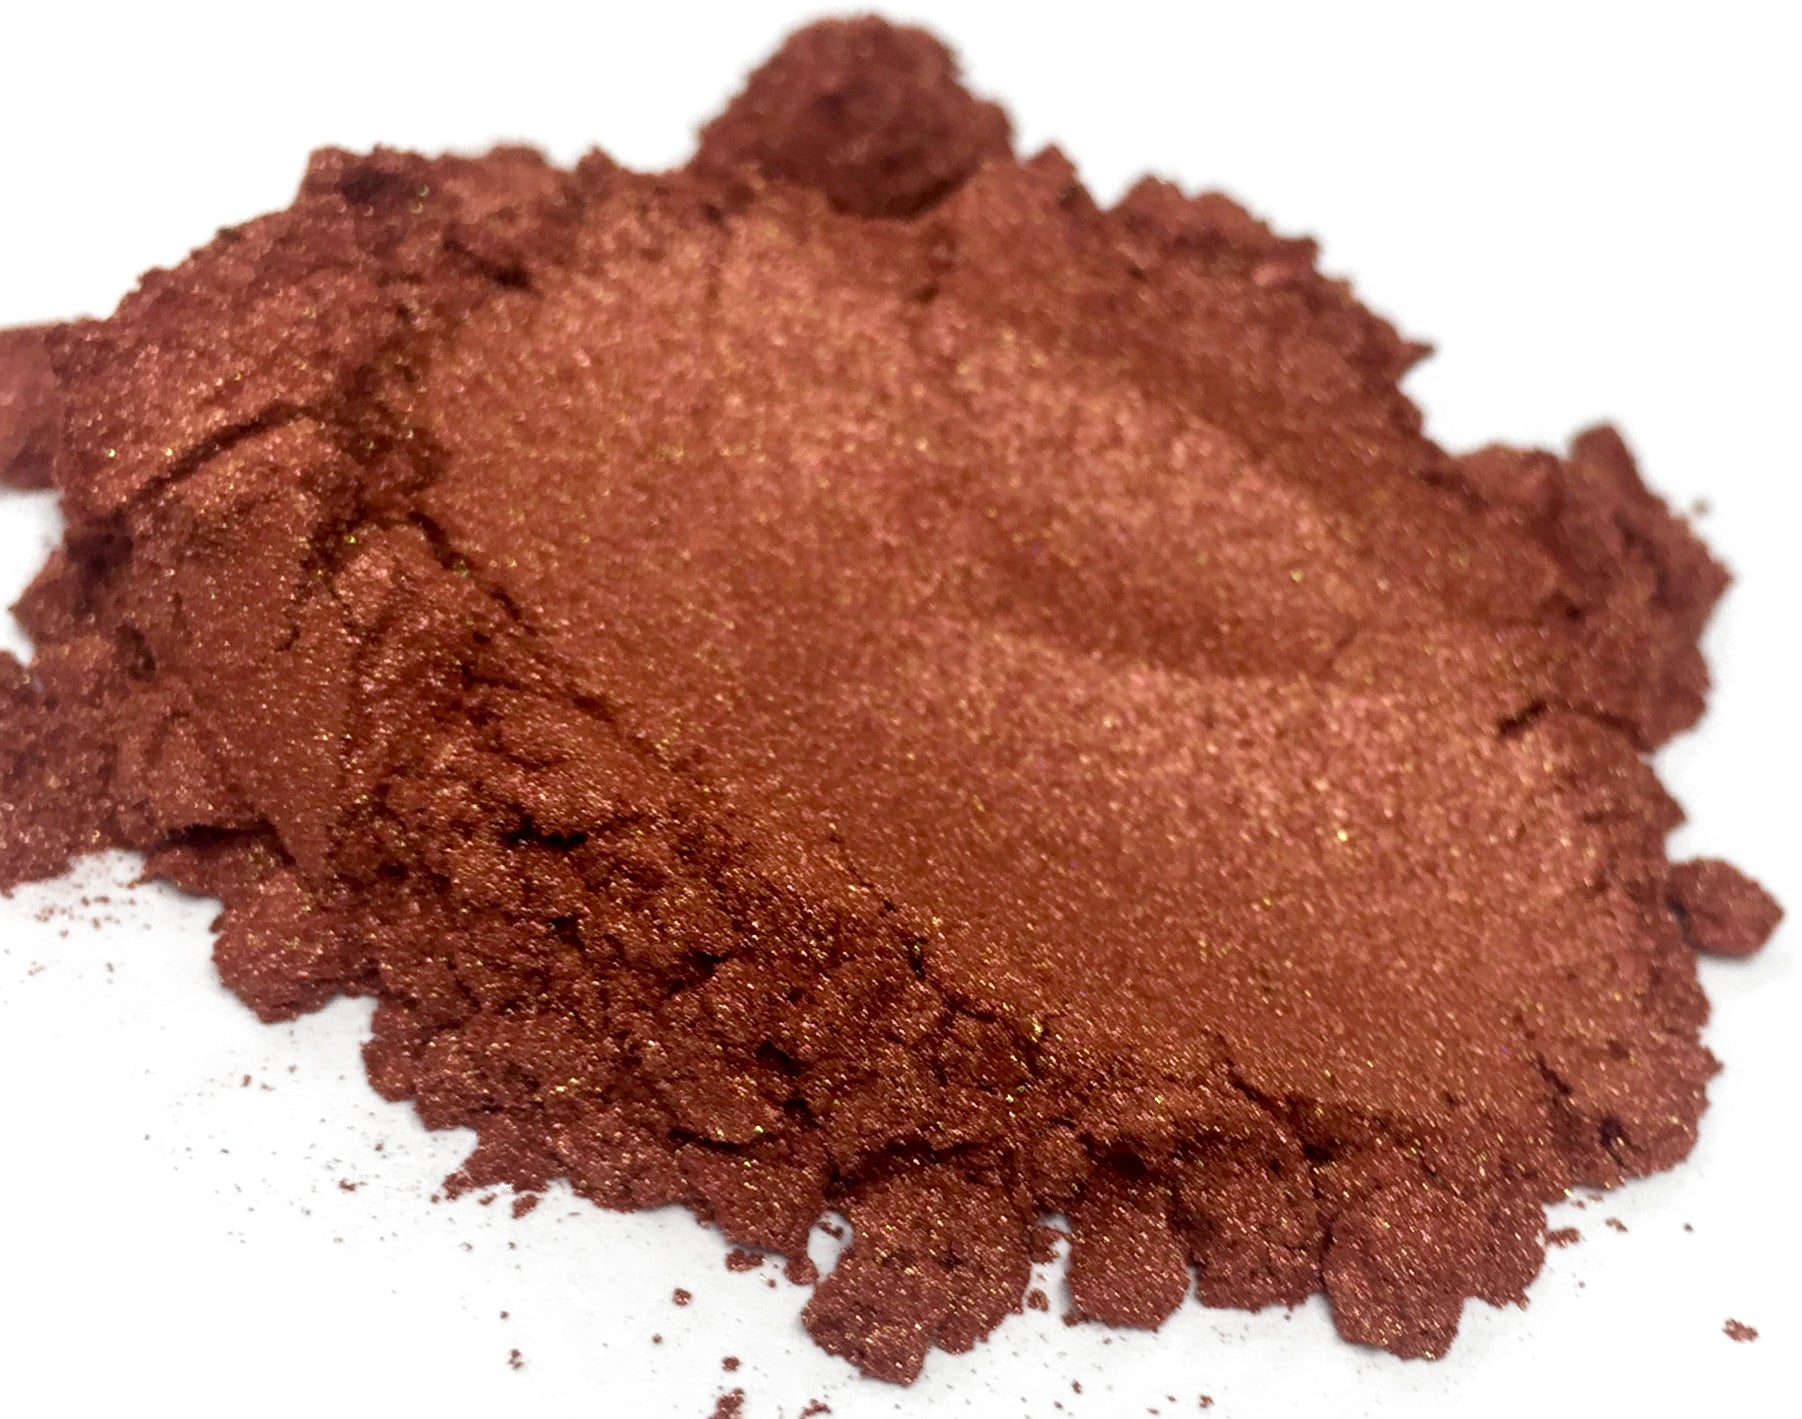 Swiss chocolate / dark brow mica colorant pigment powder cosmetic